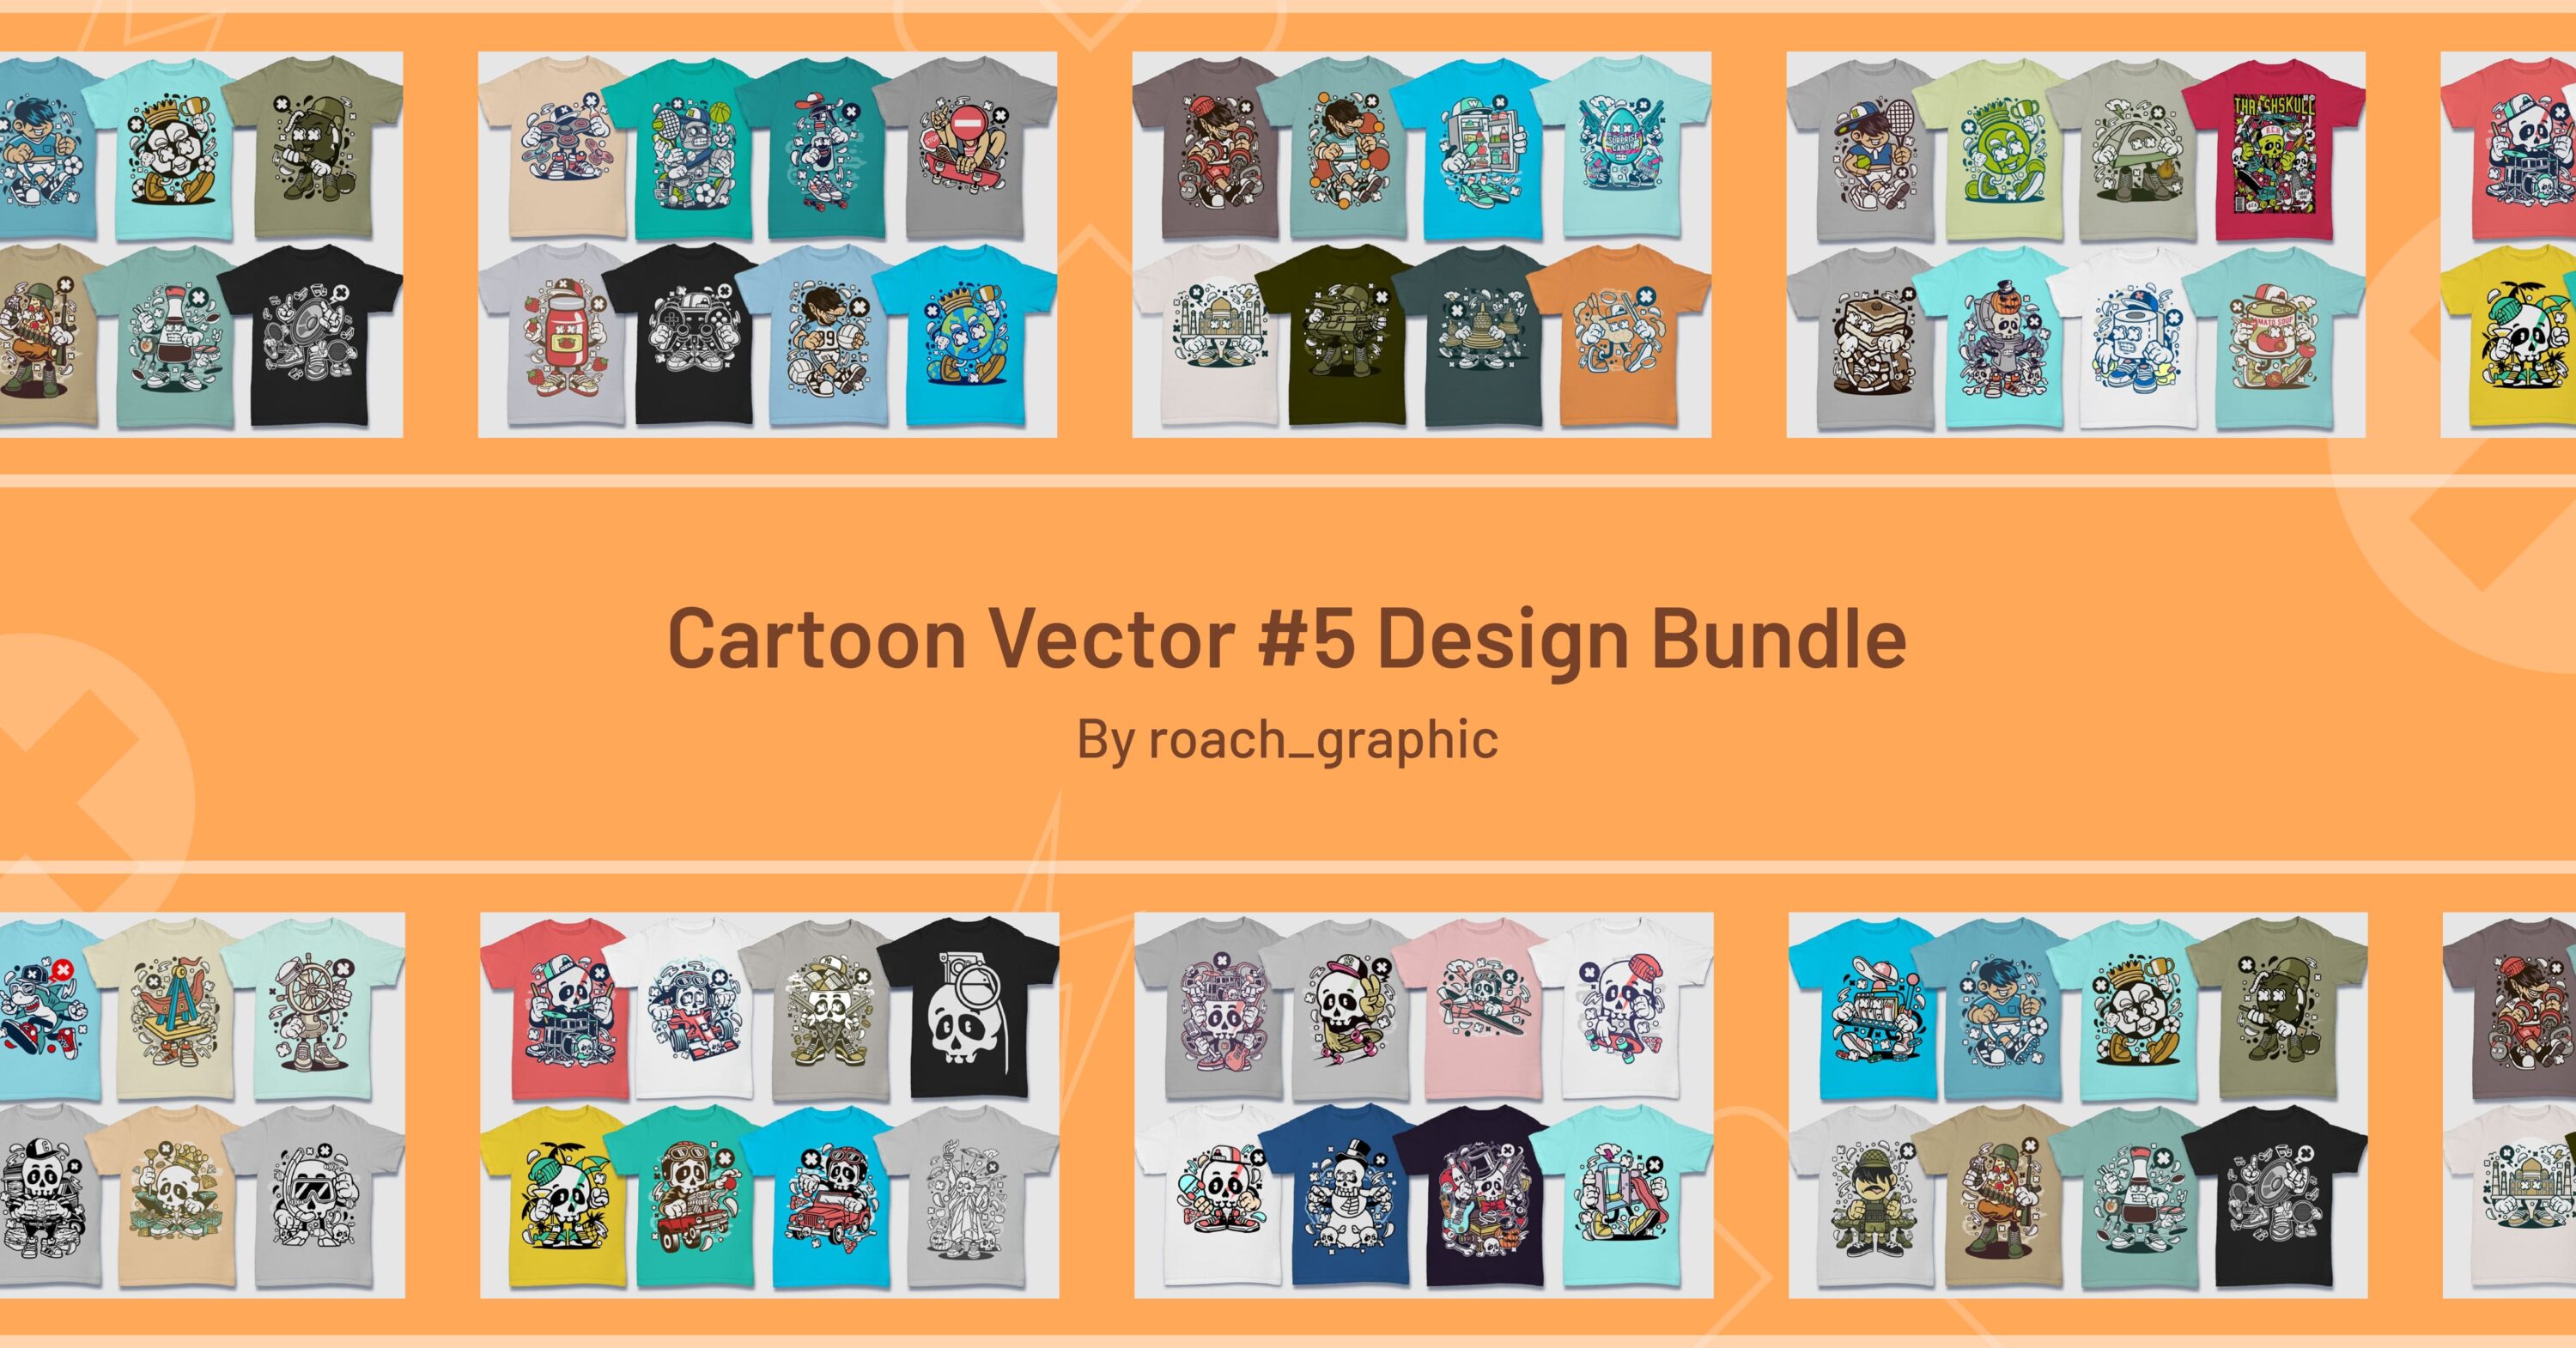 Cartoon Vector #5 Design Bundle facebook image.